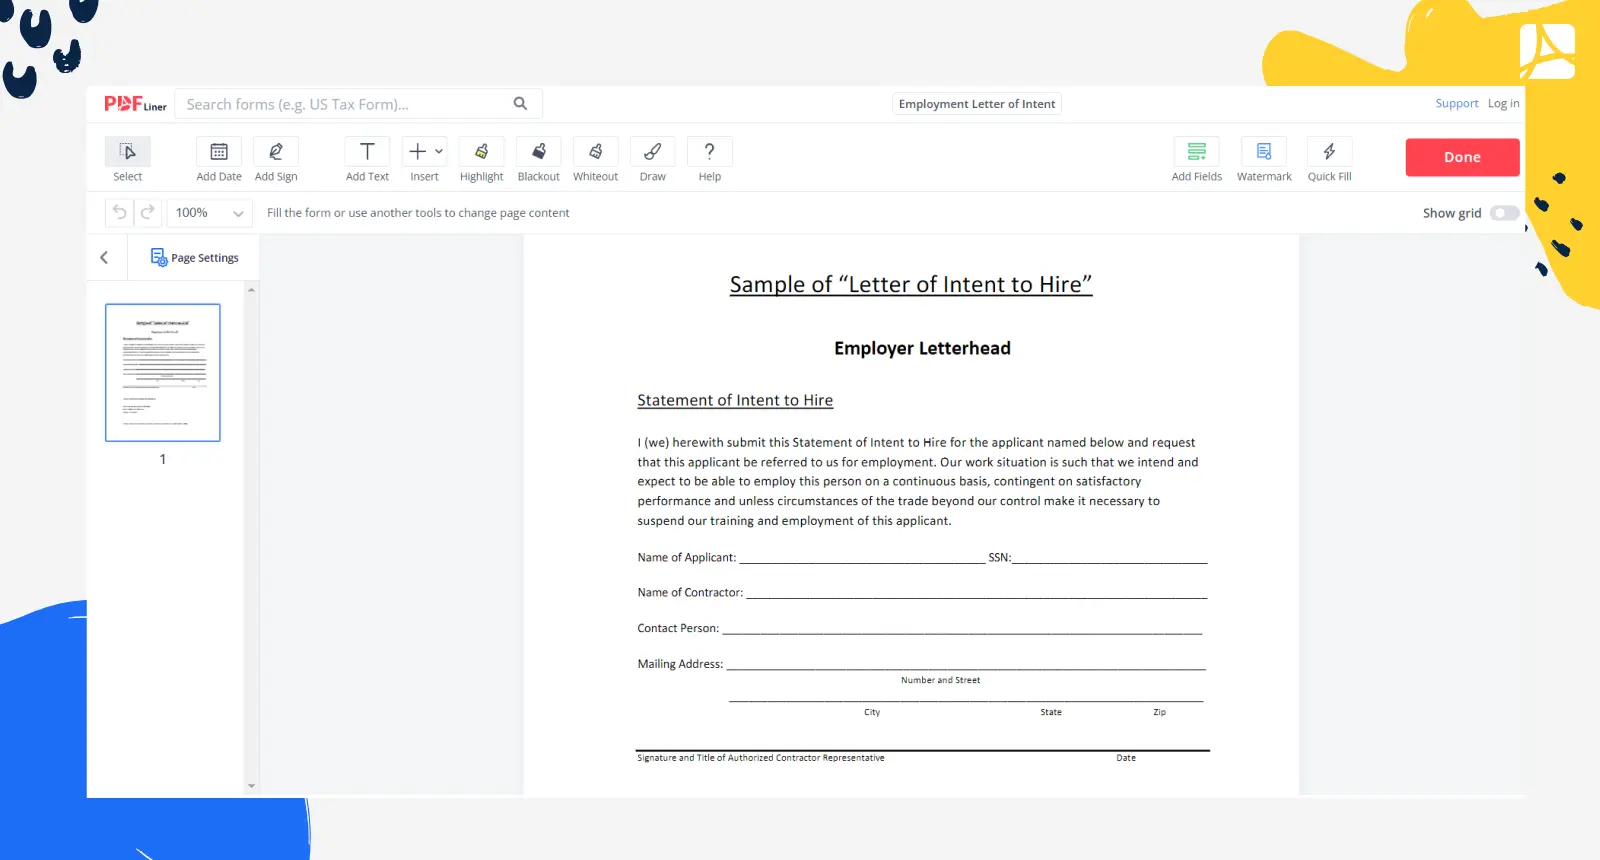 Employment Letter of Intent Form Screenshot